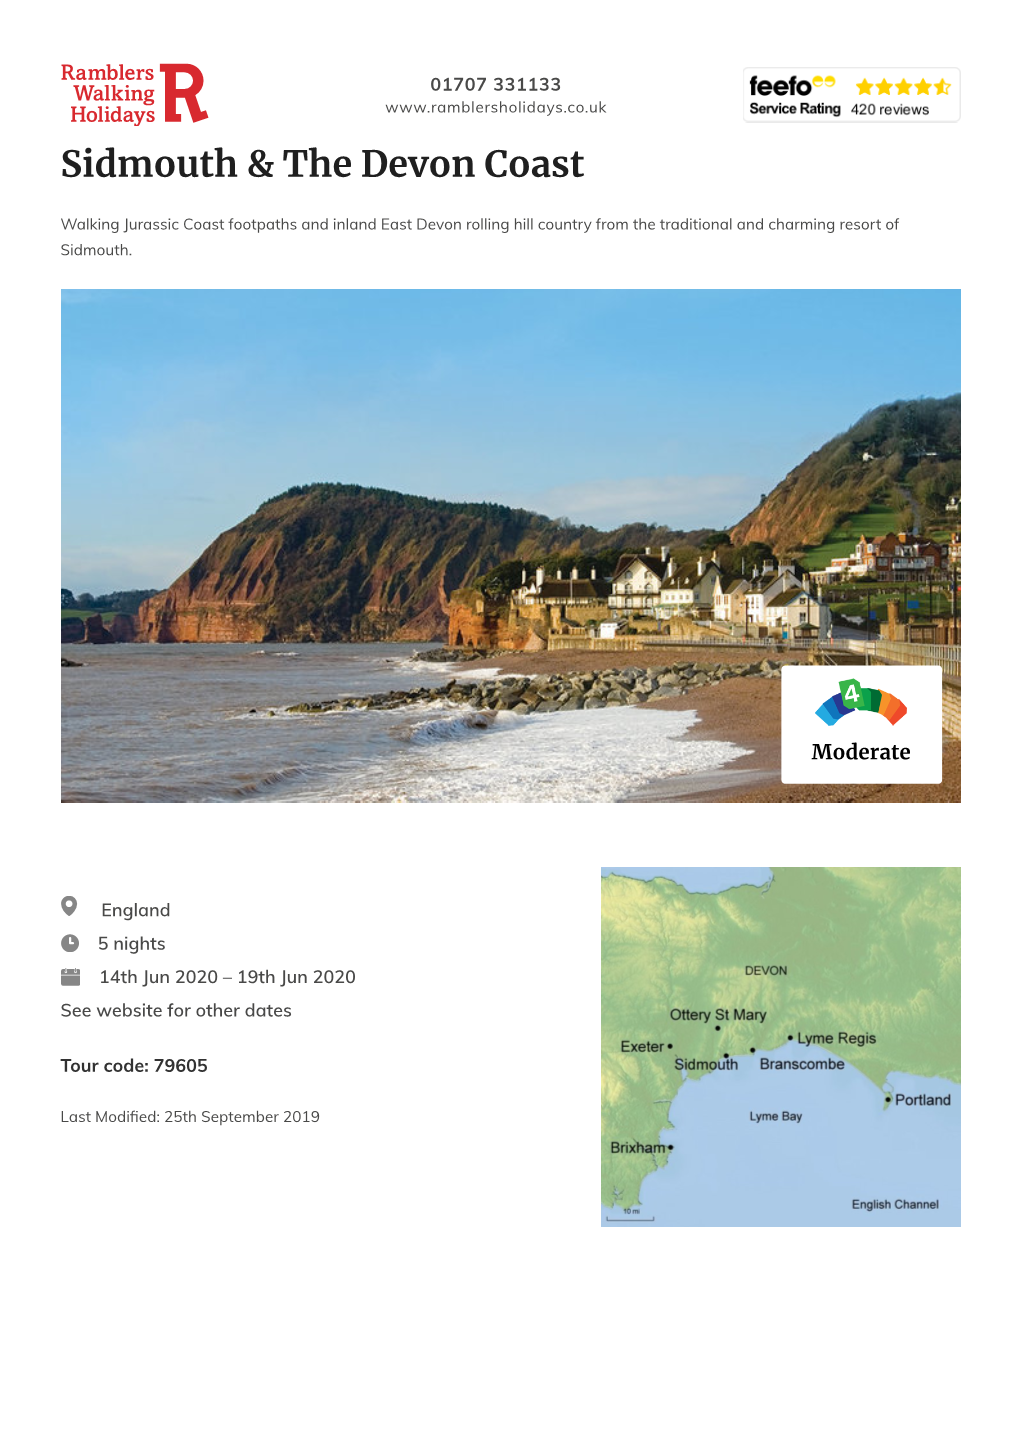 Sidmouth & the Devon Coast